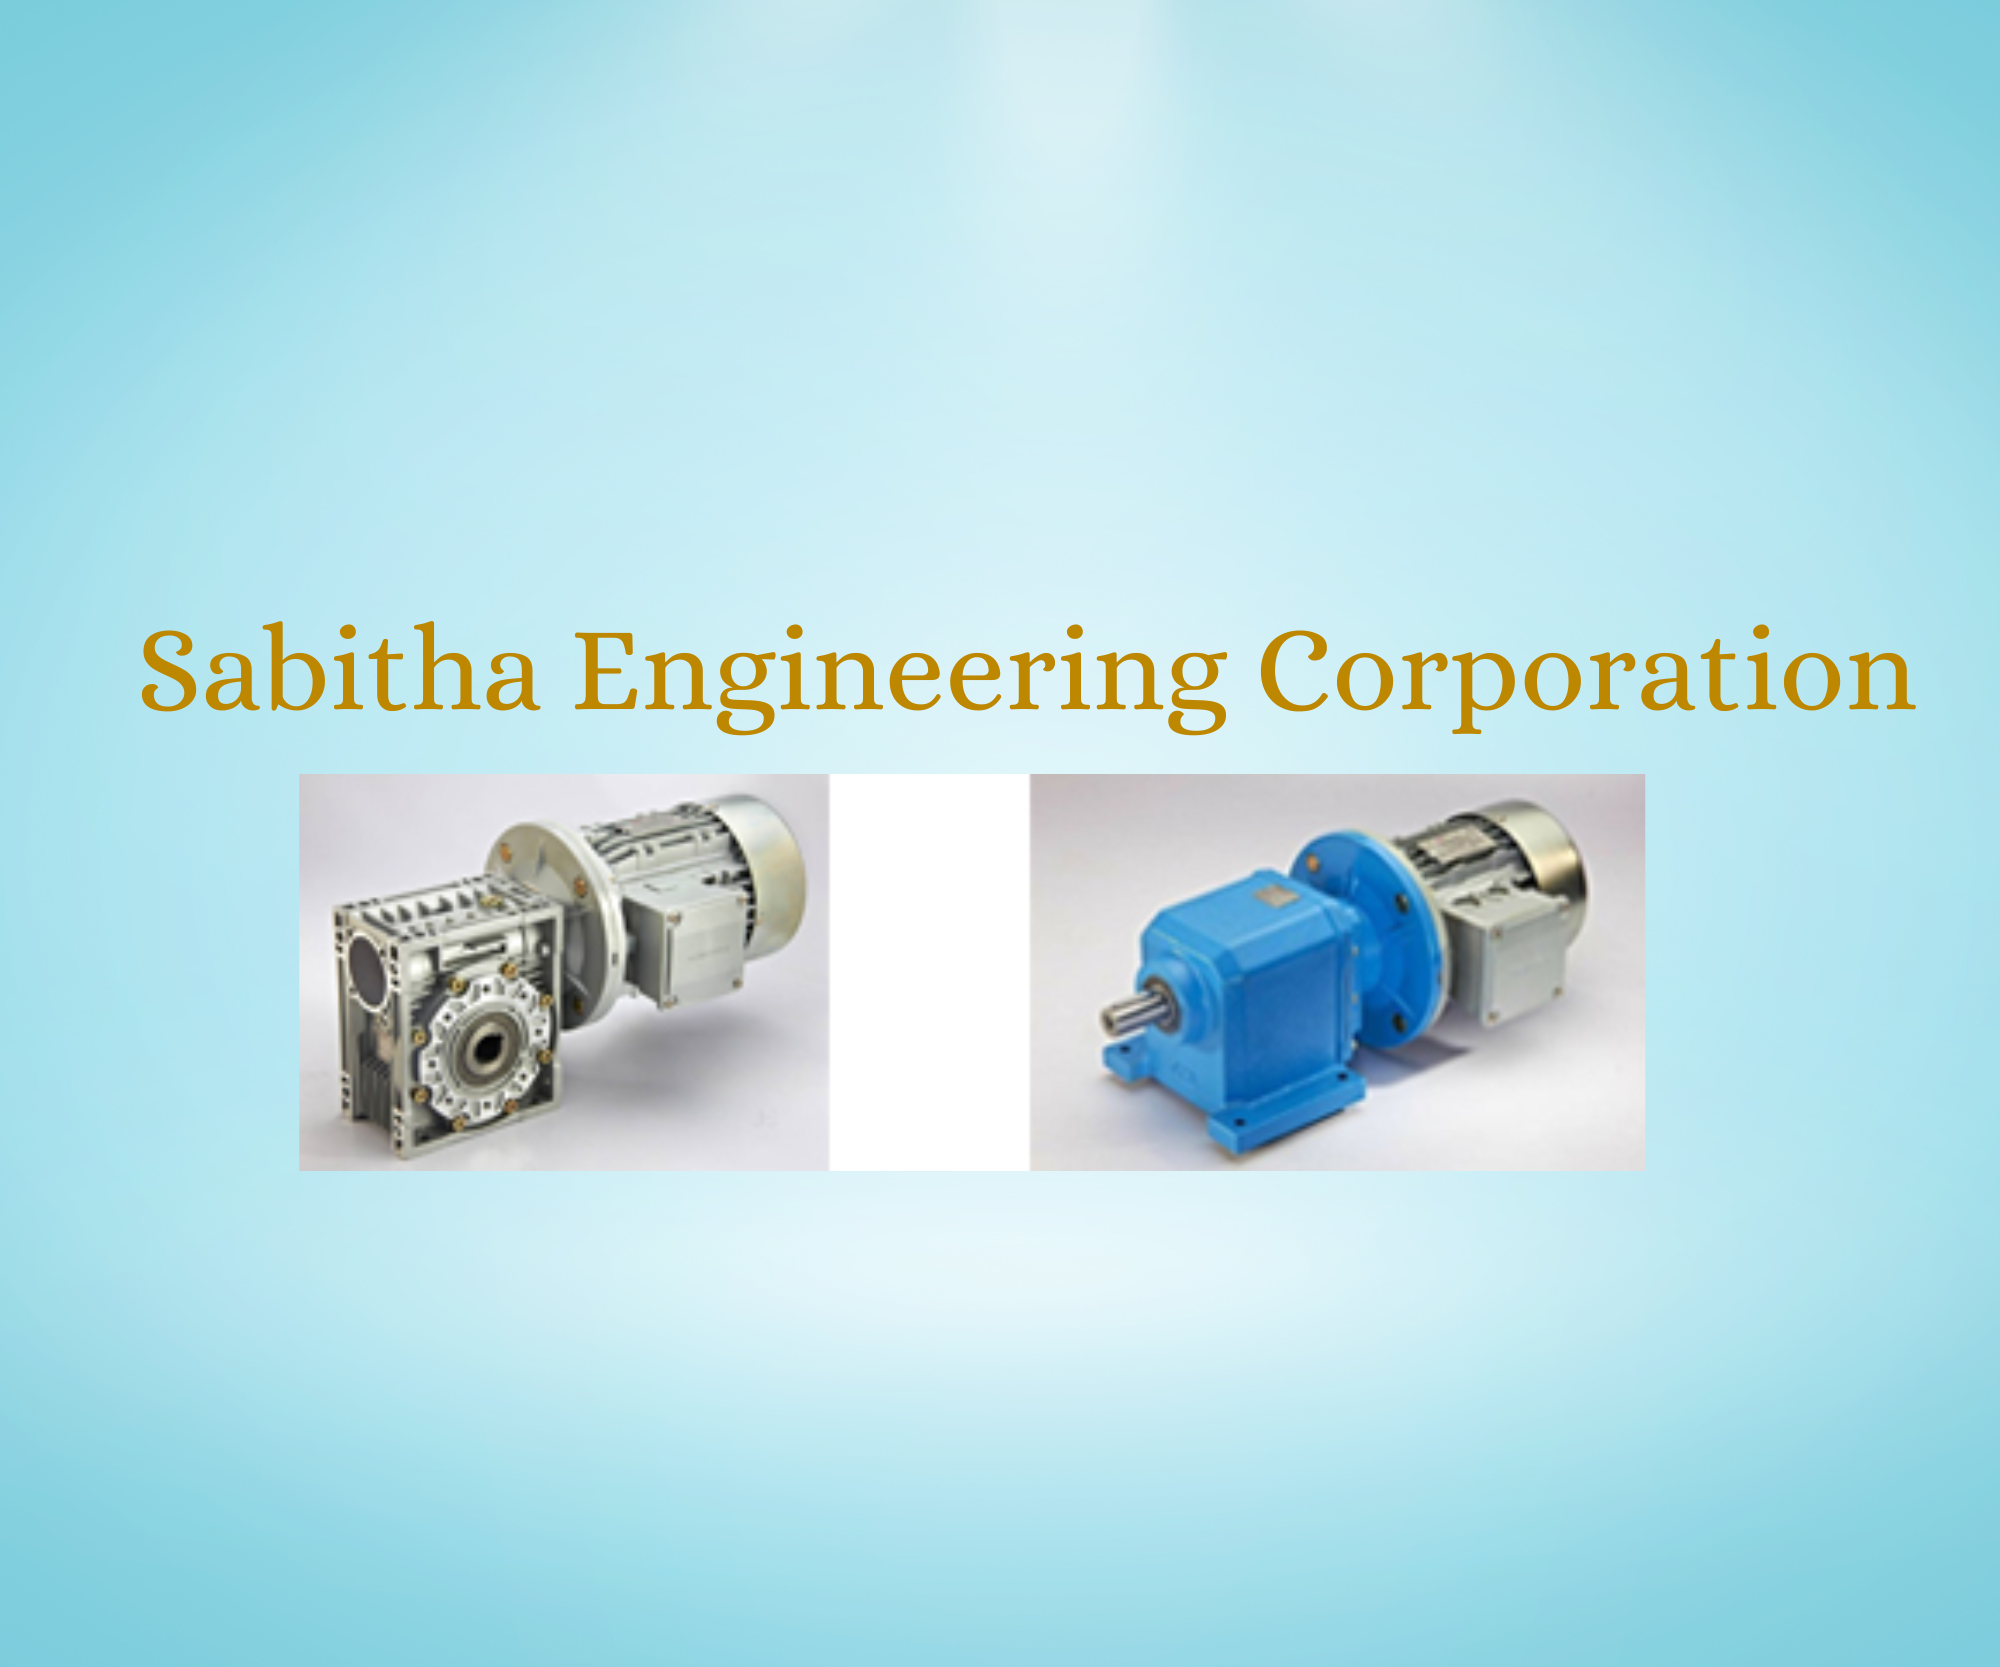 Sabitha Engineering Corporation